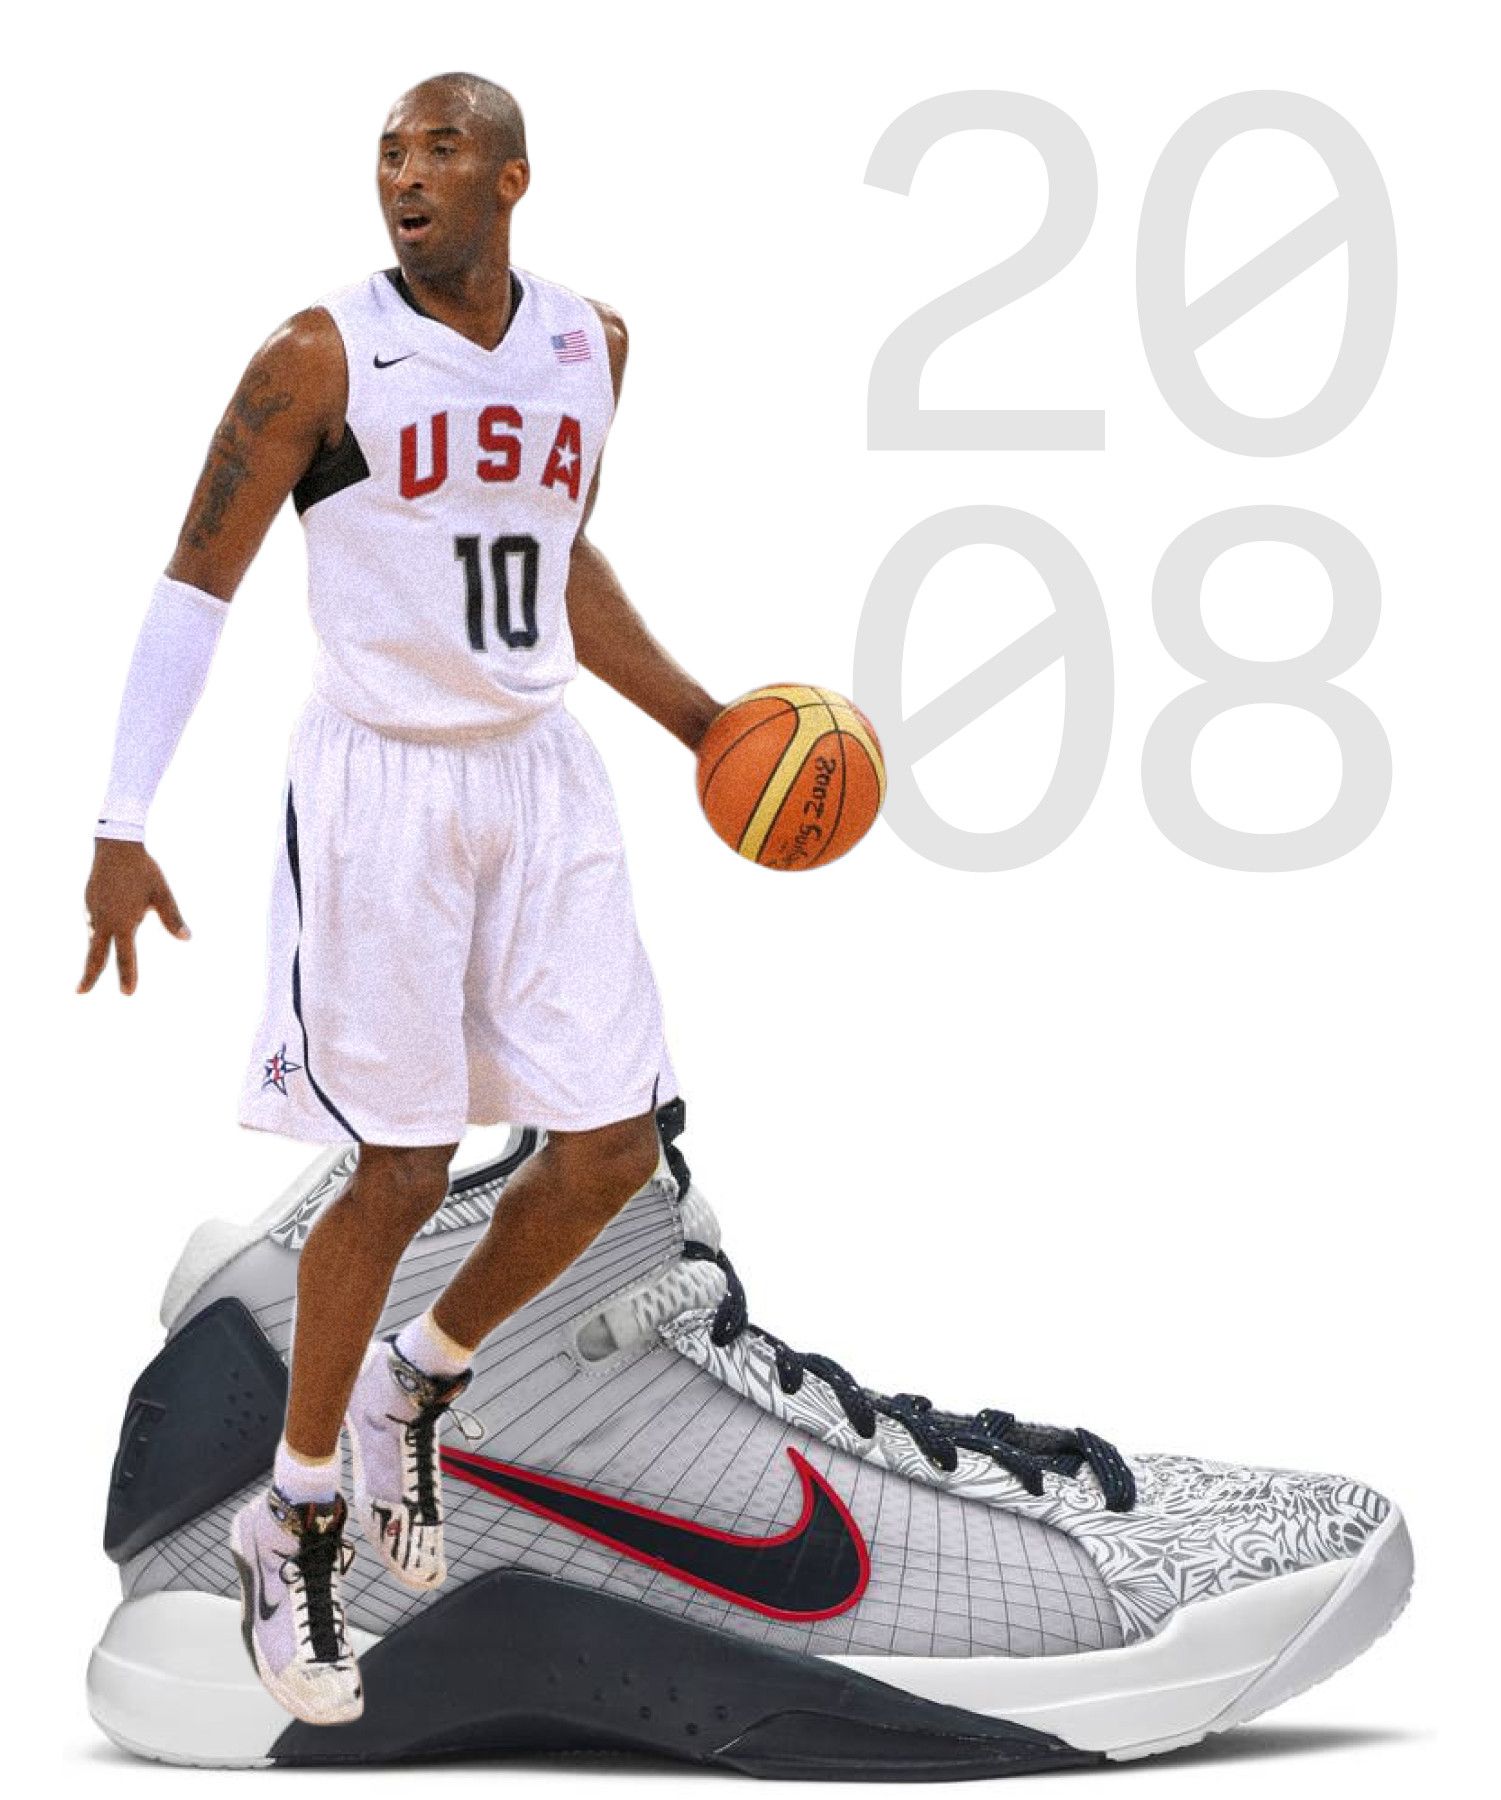 Kobe Bryant Shoes Guide, Visual History, Timeline, Gallery, Nike